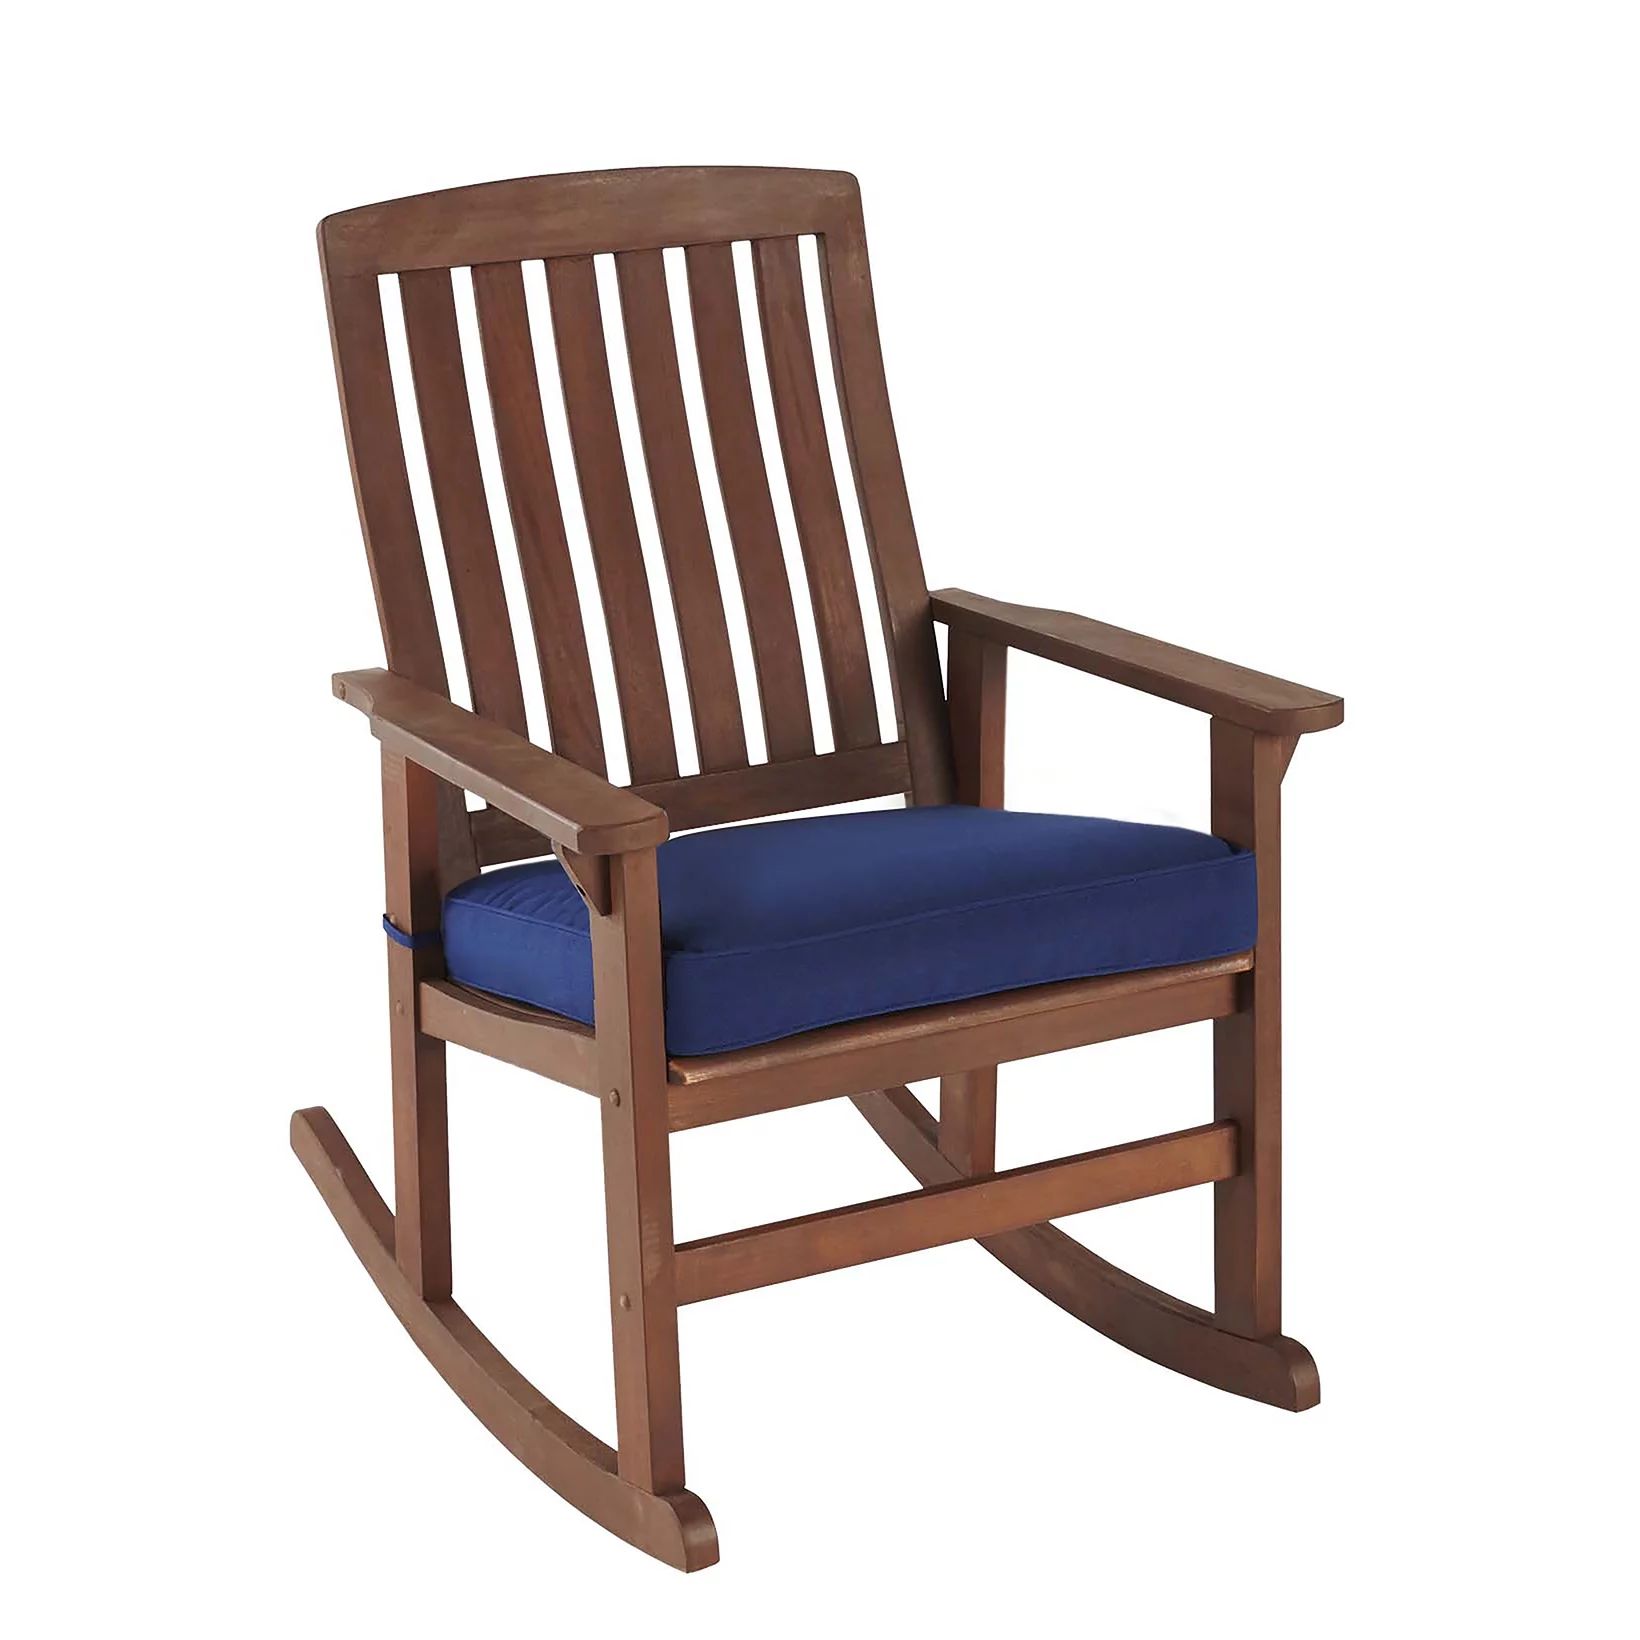 Better Homes & Gardens Delahey Outdoor Wood Porch Rocking Chair, Brown finish | Walmart (US)